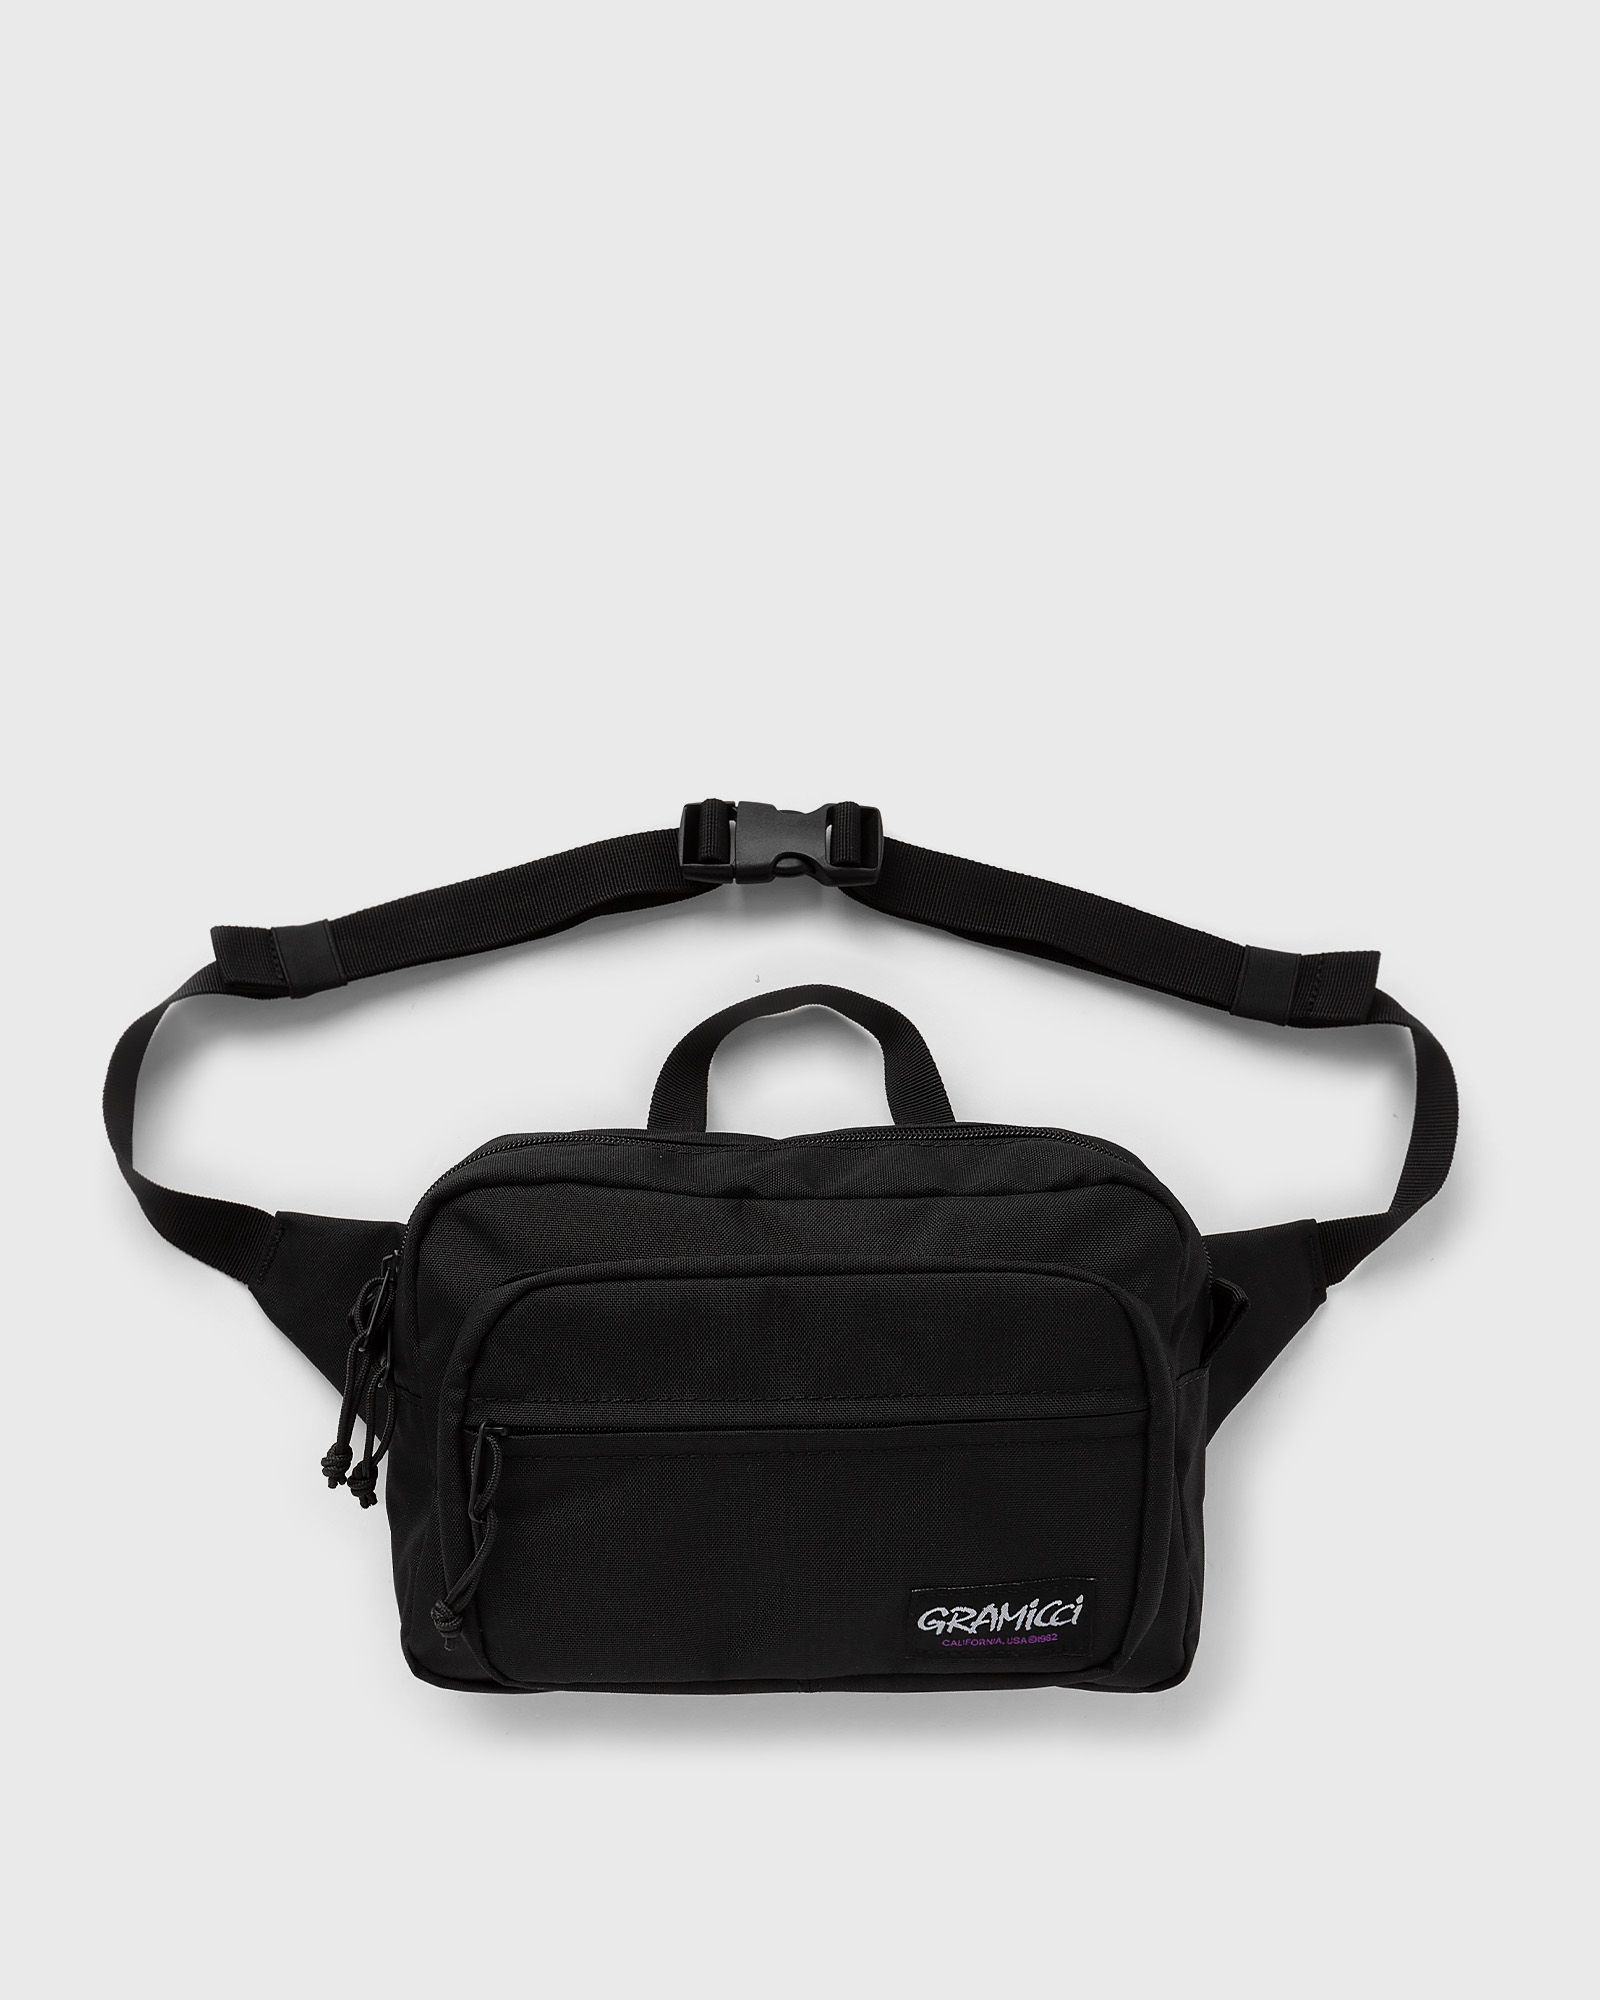 Gramicci - cordura hiker bag men messenger & crossbody bags black in größe:one size